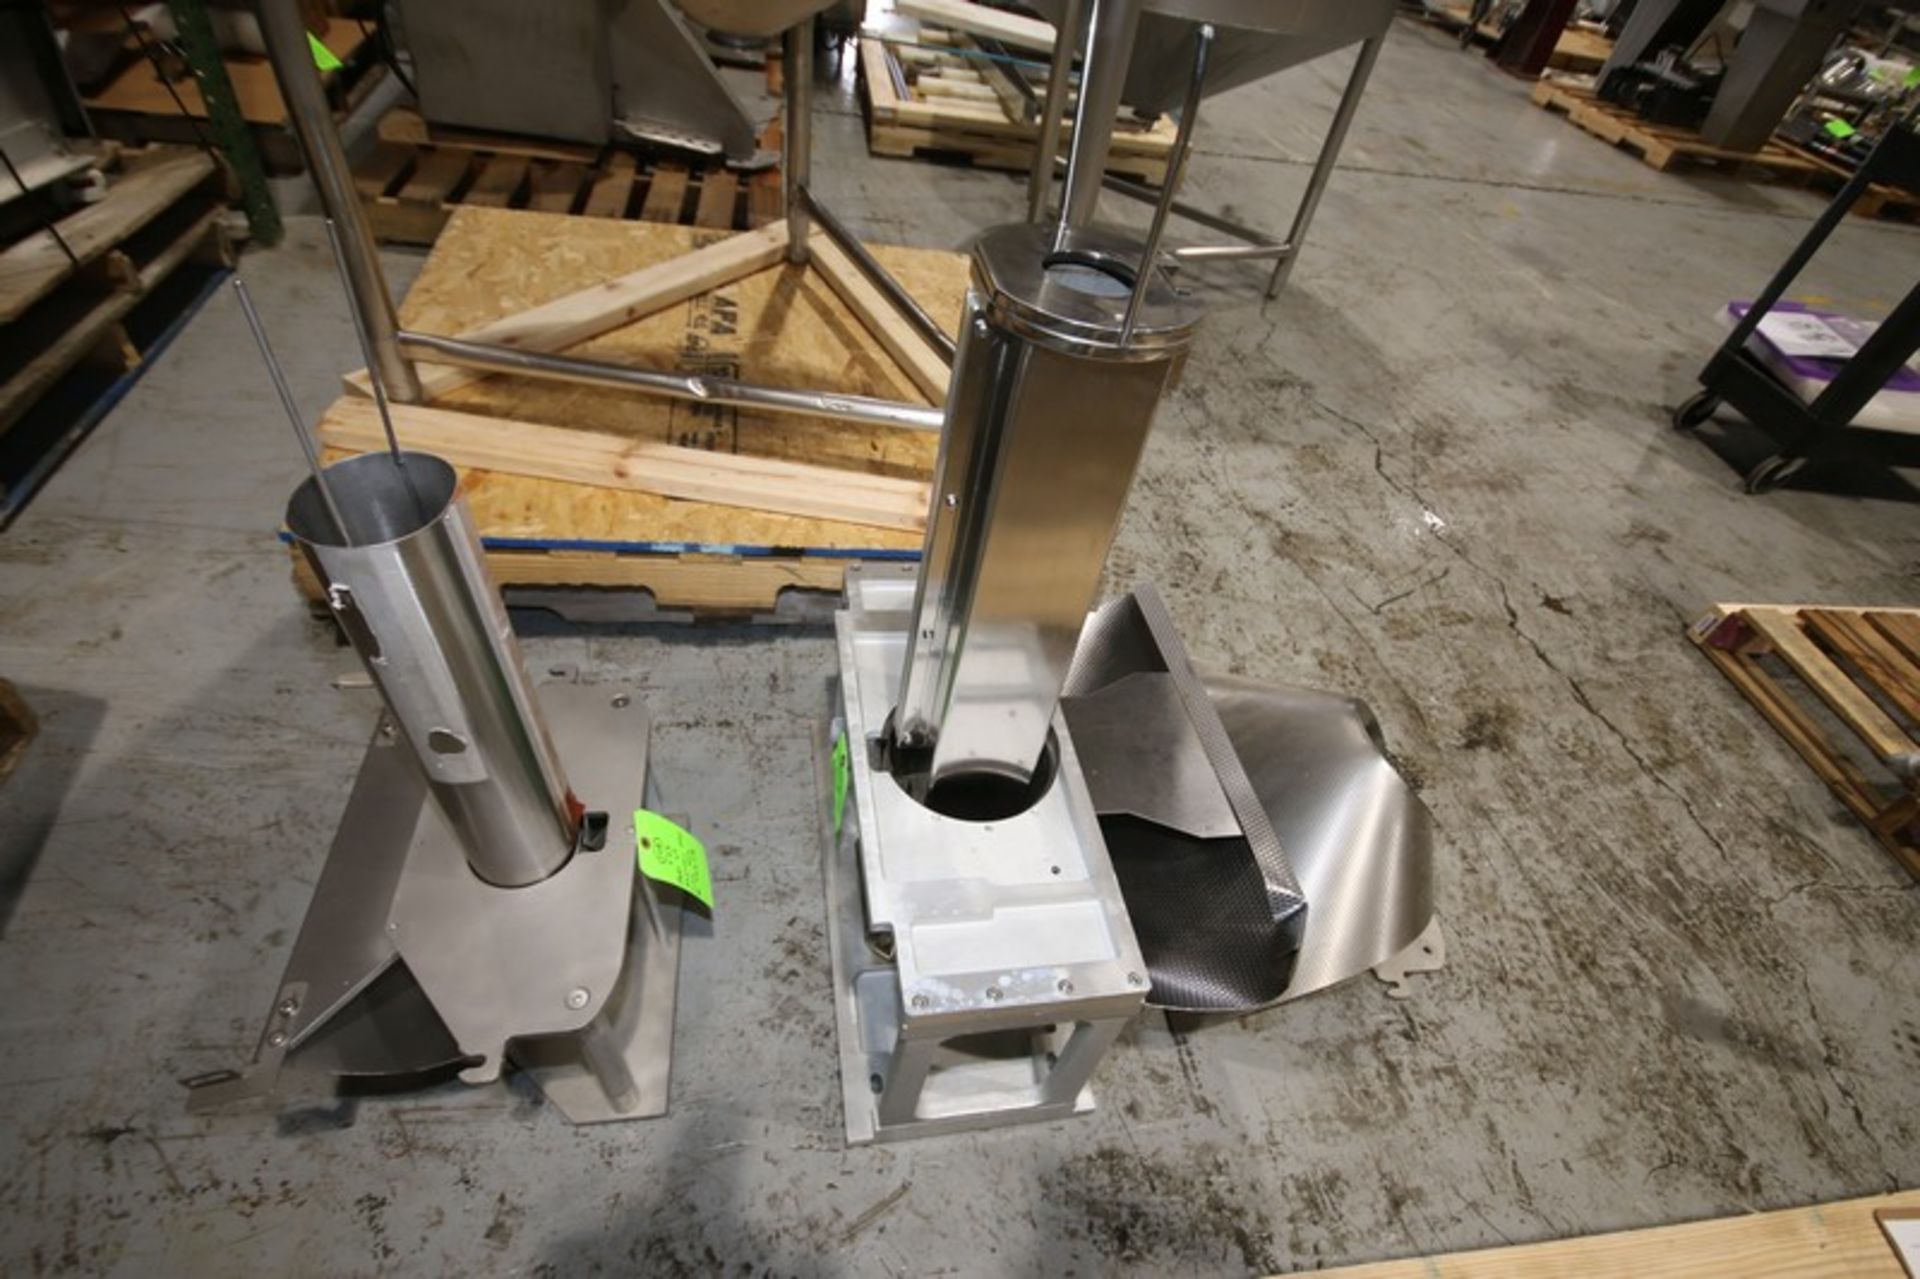 2014 Hayssen Sandiacre Vertical Form Fill & Seal Machine (VFFS), Model ULTIMA 120-19 -HR, SN X83939, - Image 14 of 17